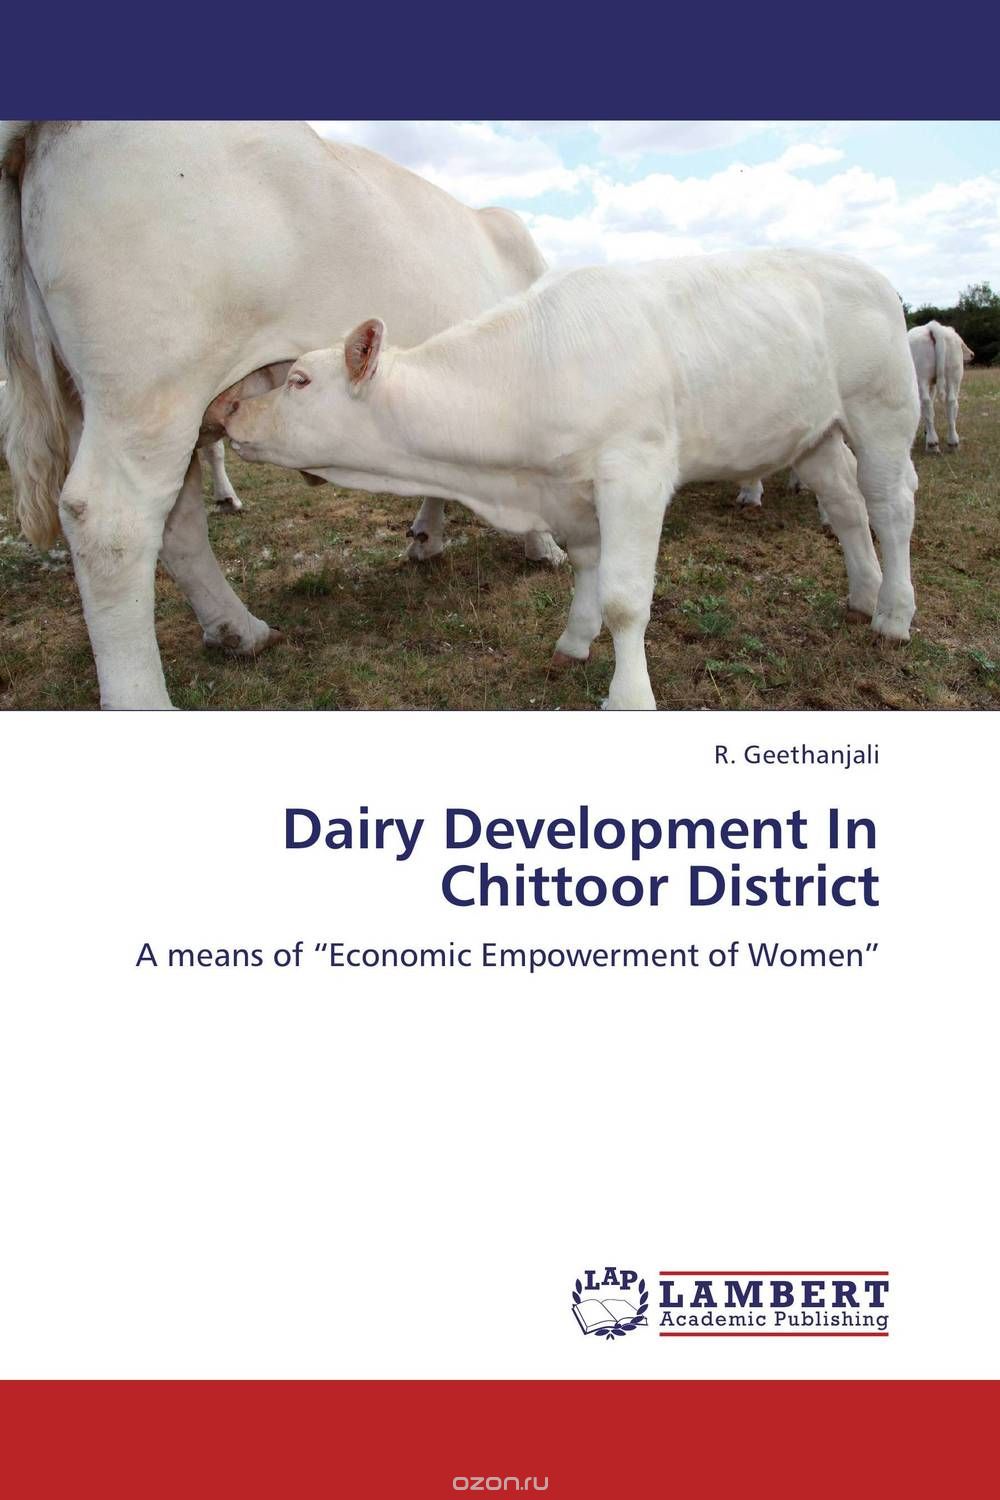 Скачать книгу "Dairy Development In Chittoor District"